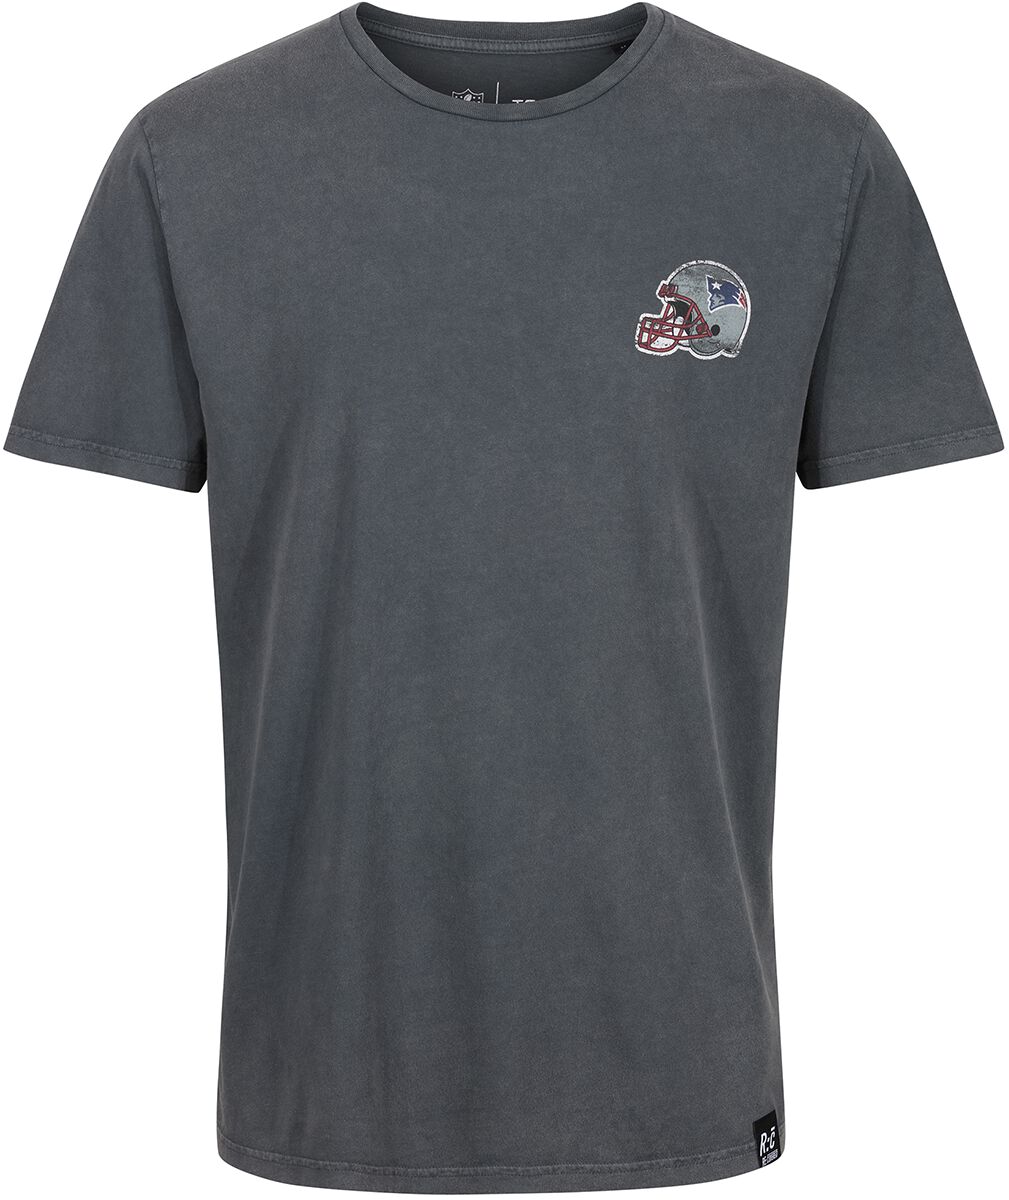 Recovered Clothing T-Shirt - NFL Patriots College Black Washed - S bis XXL - für Männer - Größe XL - multicolor